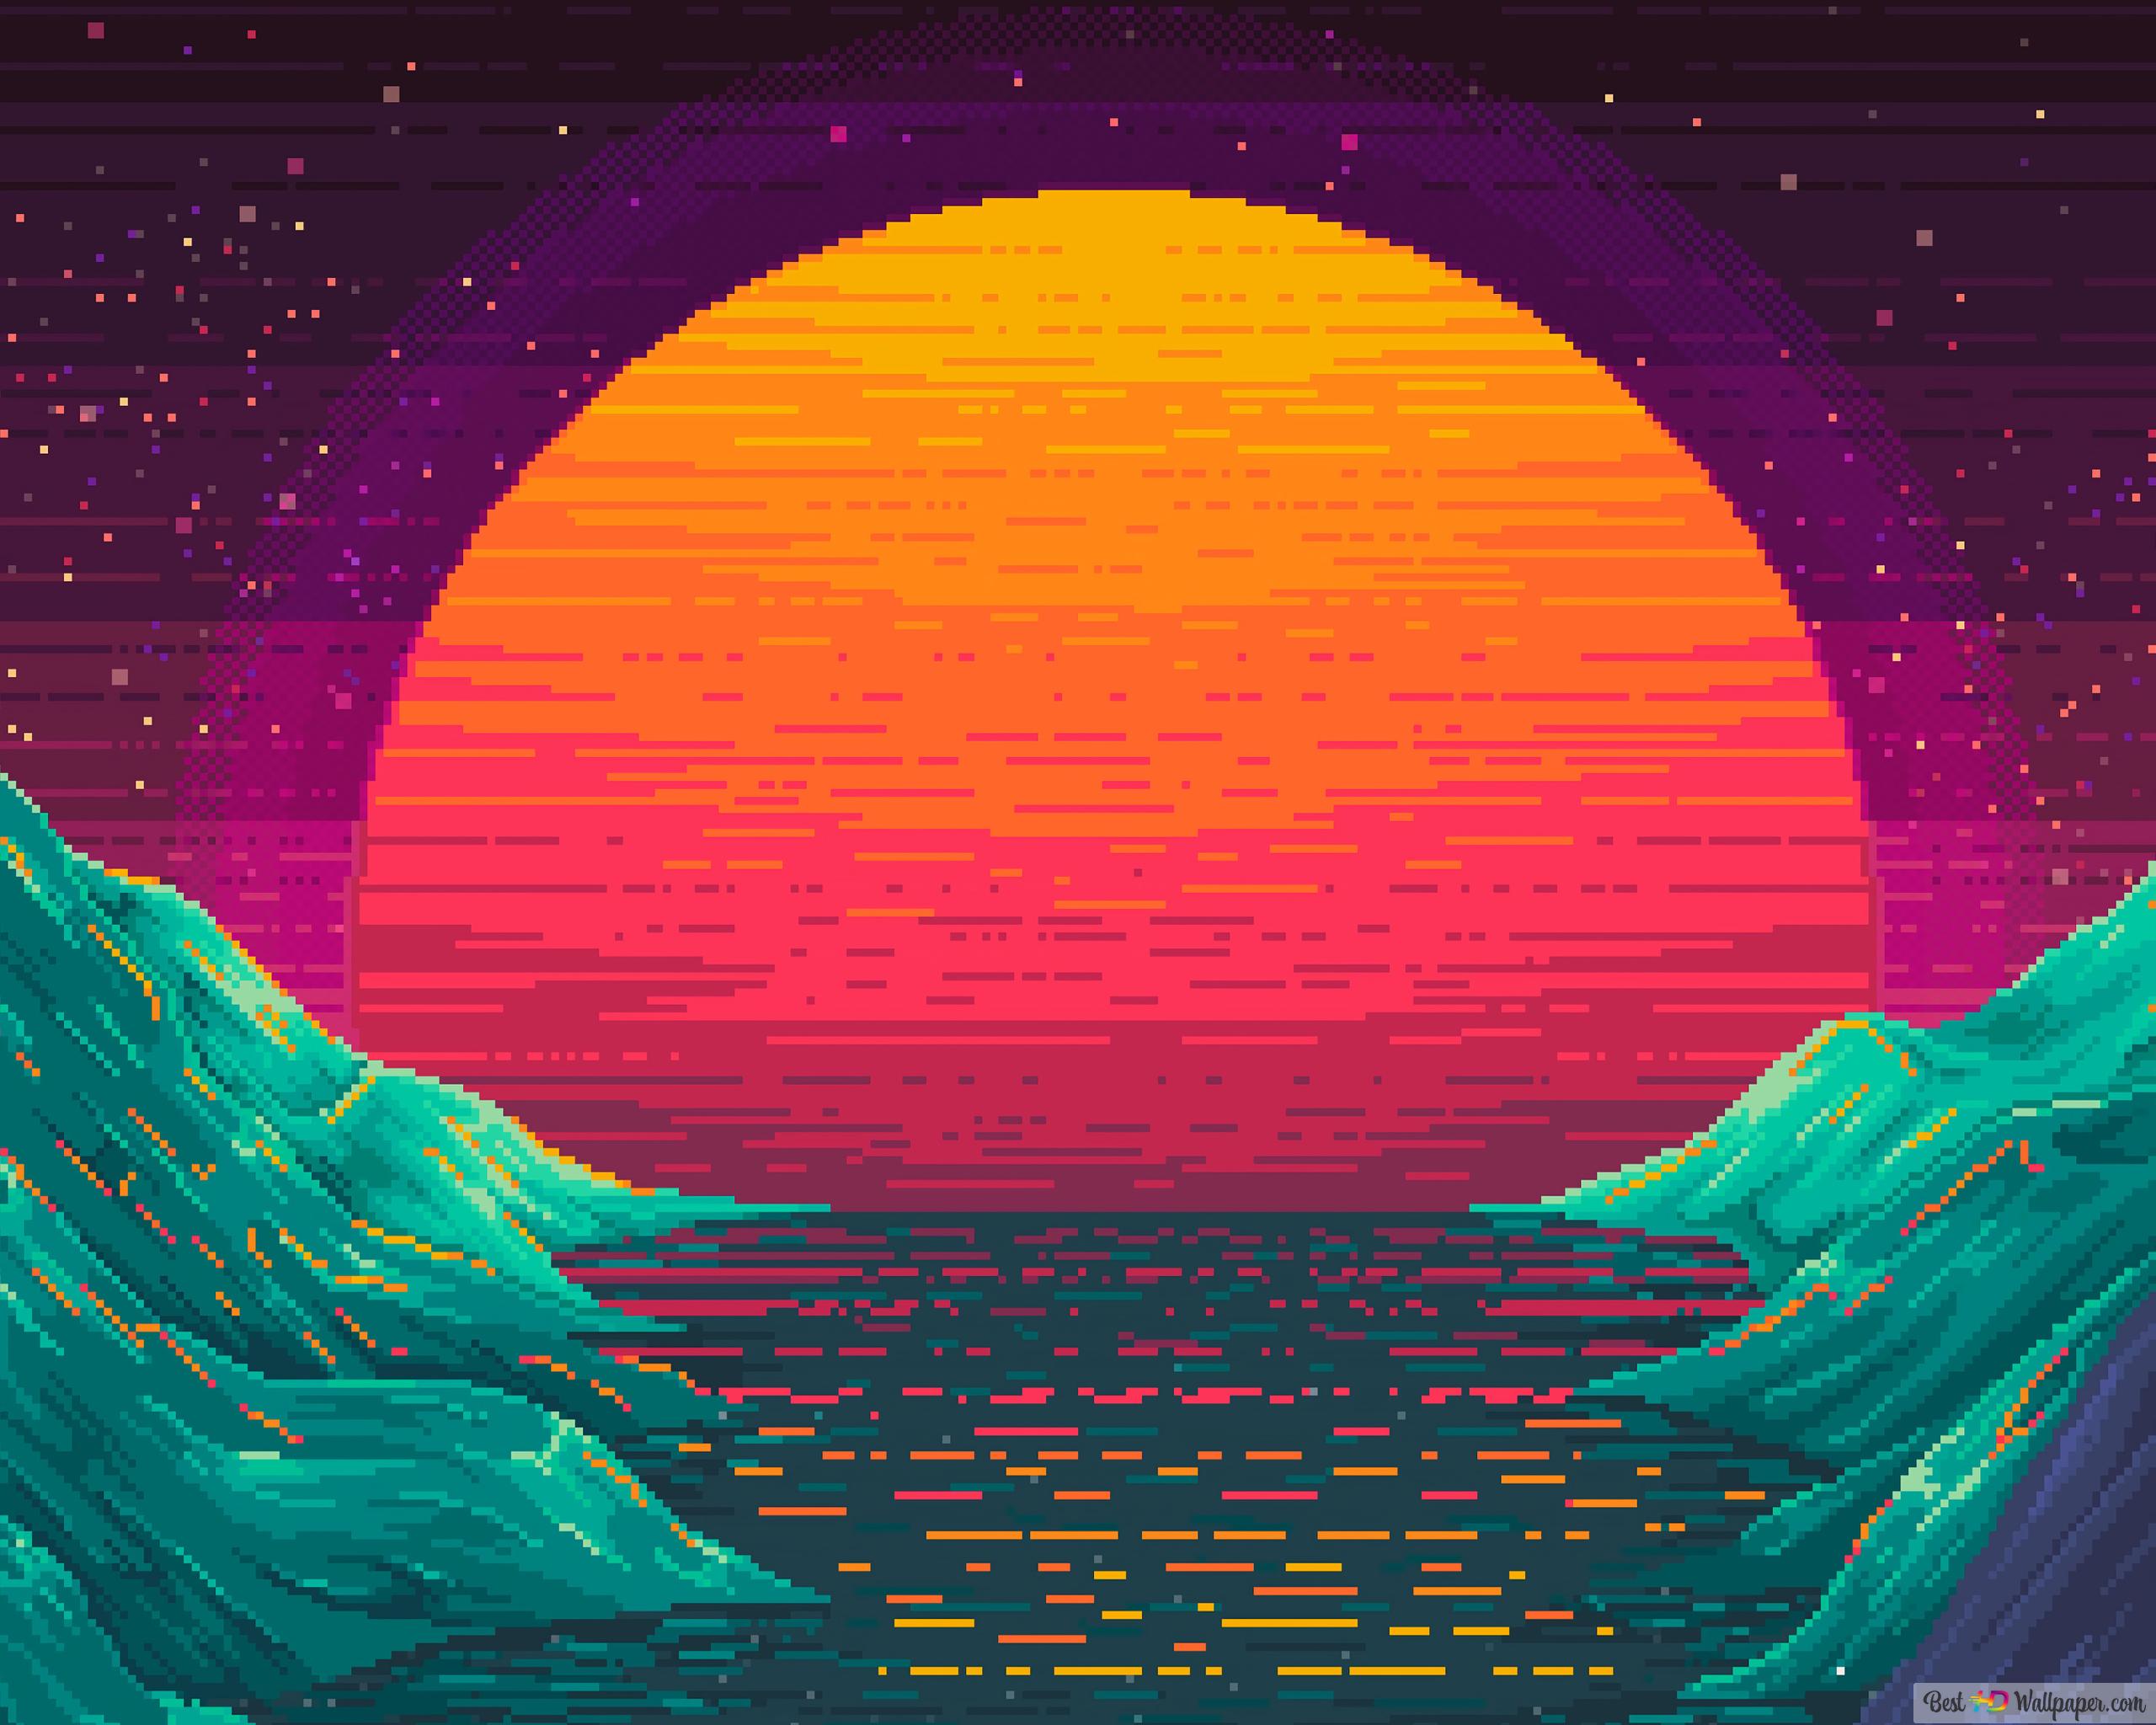 Sunset Pixel Art 4K wallpaper download